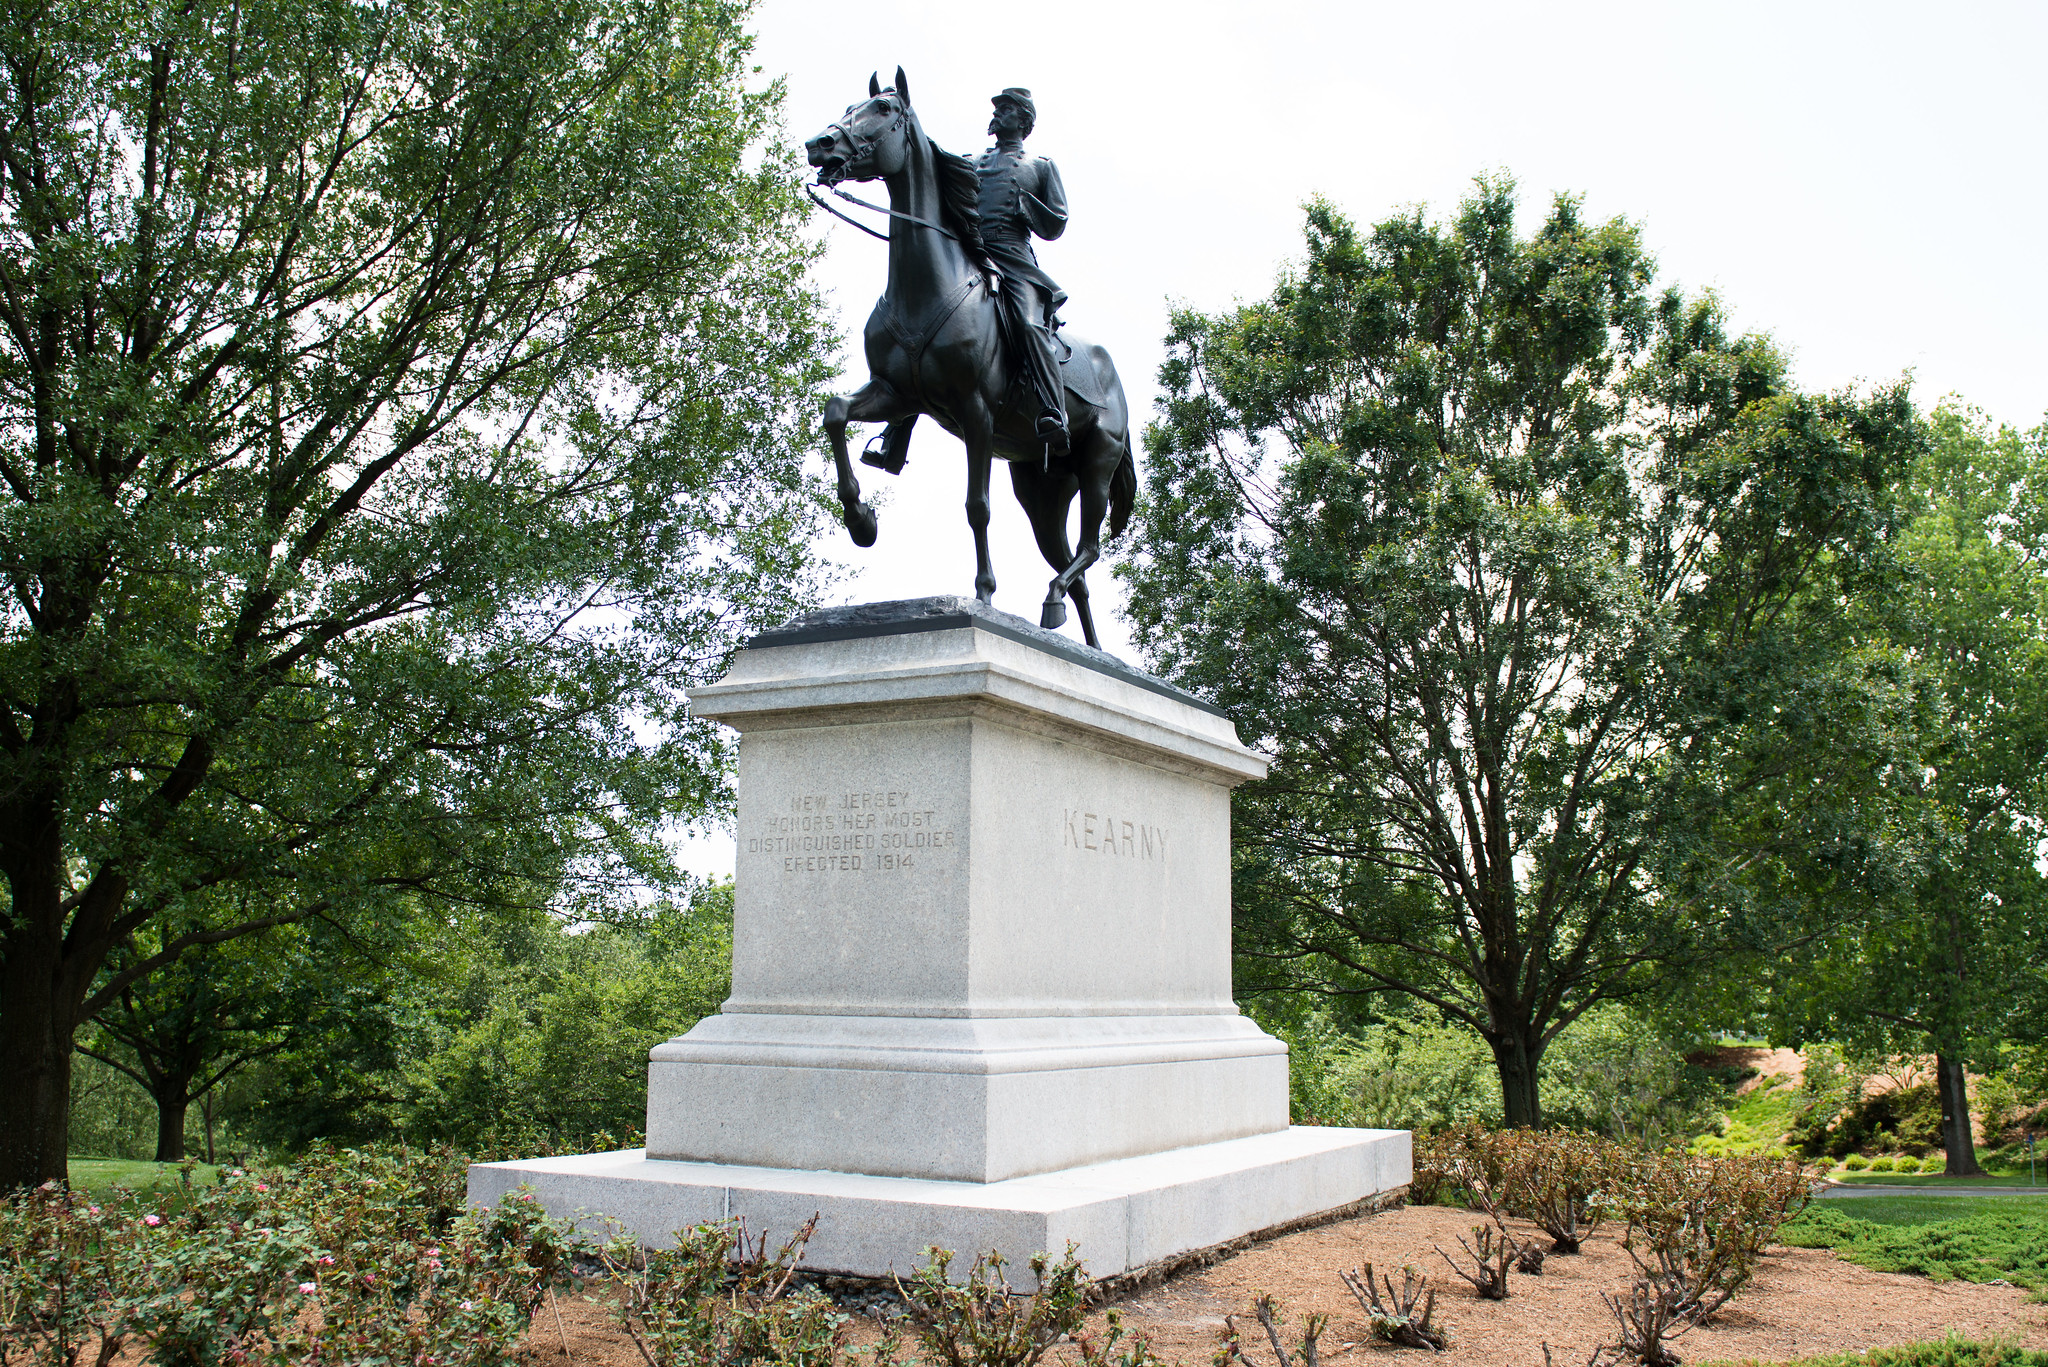 A magnificent equestrian statue commemorates Major General Philip Kearny's cavalry leadership